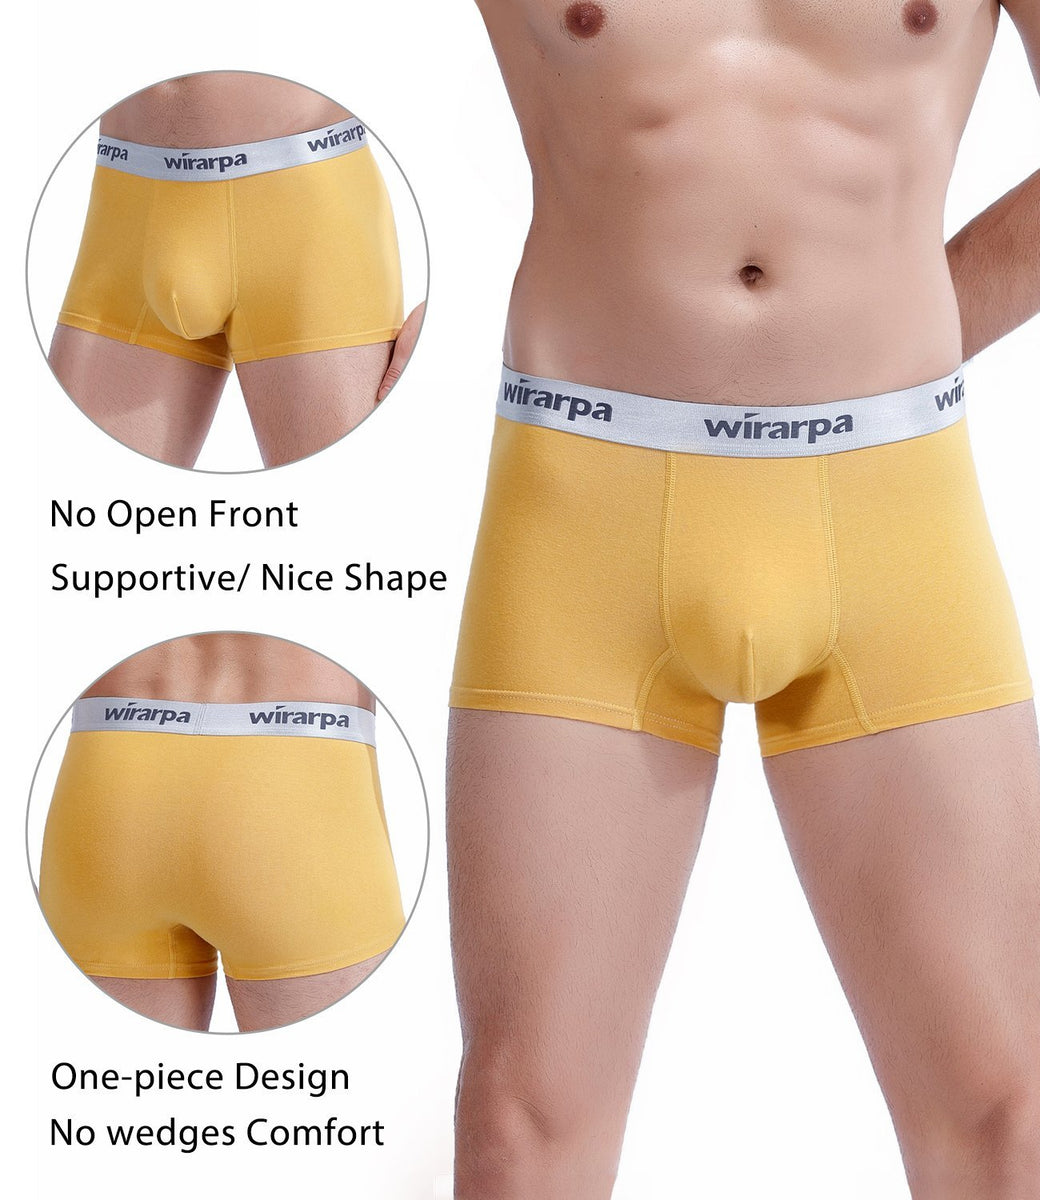  wirarpa Men's Underwear 4 Pack Stretch Modal Microfiber Trunks  Soft Waistband Short Leg, Small 1401-4p-print Design : Clothing, Shoes &  Jewelry